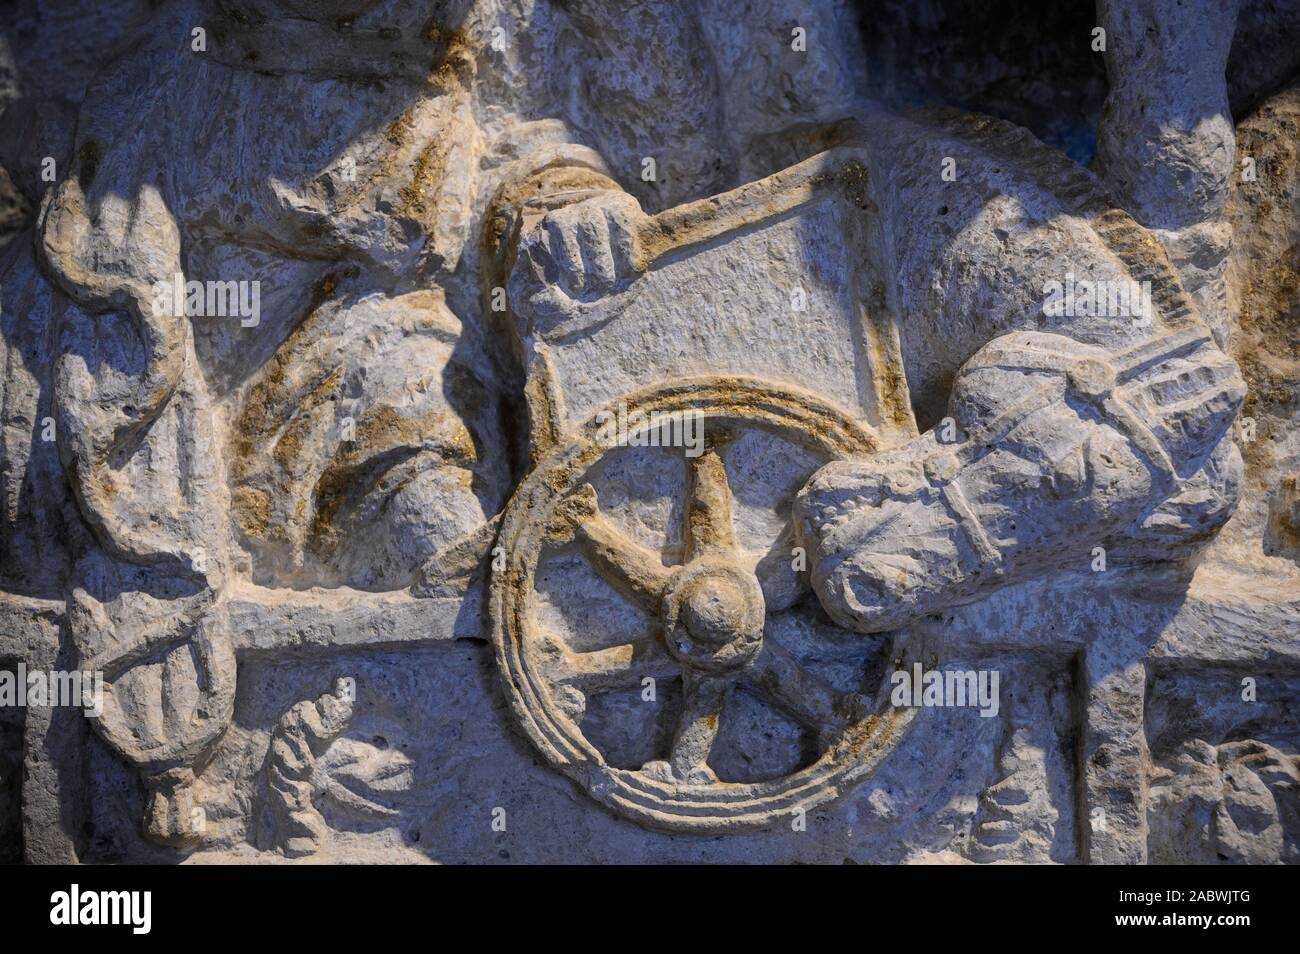 Perugia. Italien. Etruskische cinerary Urne aus dem Cacni Familie Grab in der Nähe von Perugia, Museo Archeologico Nazionale dell'Umbria (MANU - Nationale Archaeologi Stockfoto